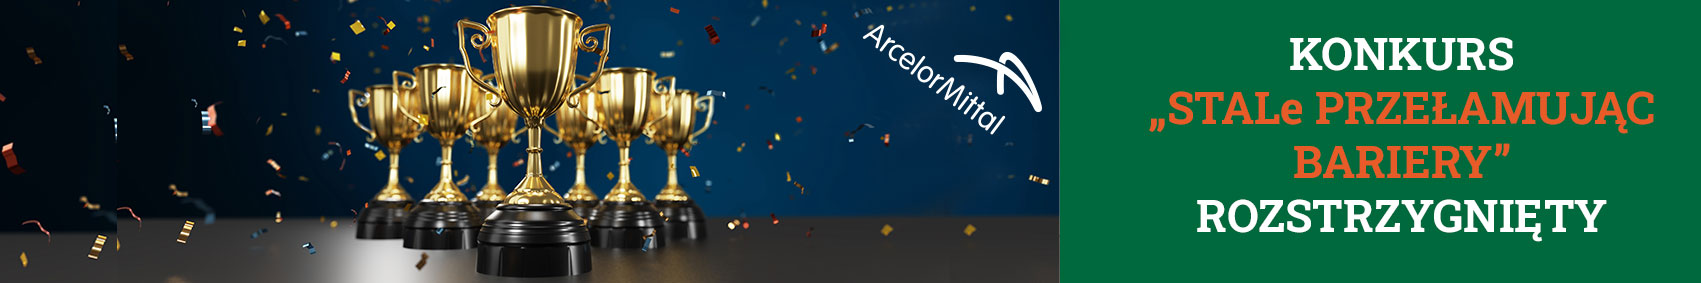 Grafika ozdobna z logiem ArcelorMittal i napisem Konkurs 